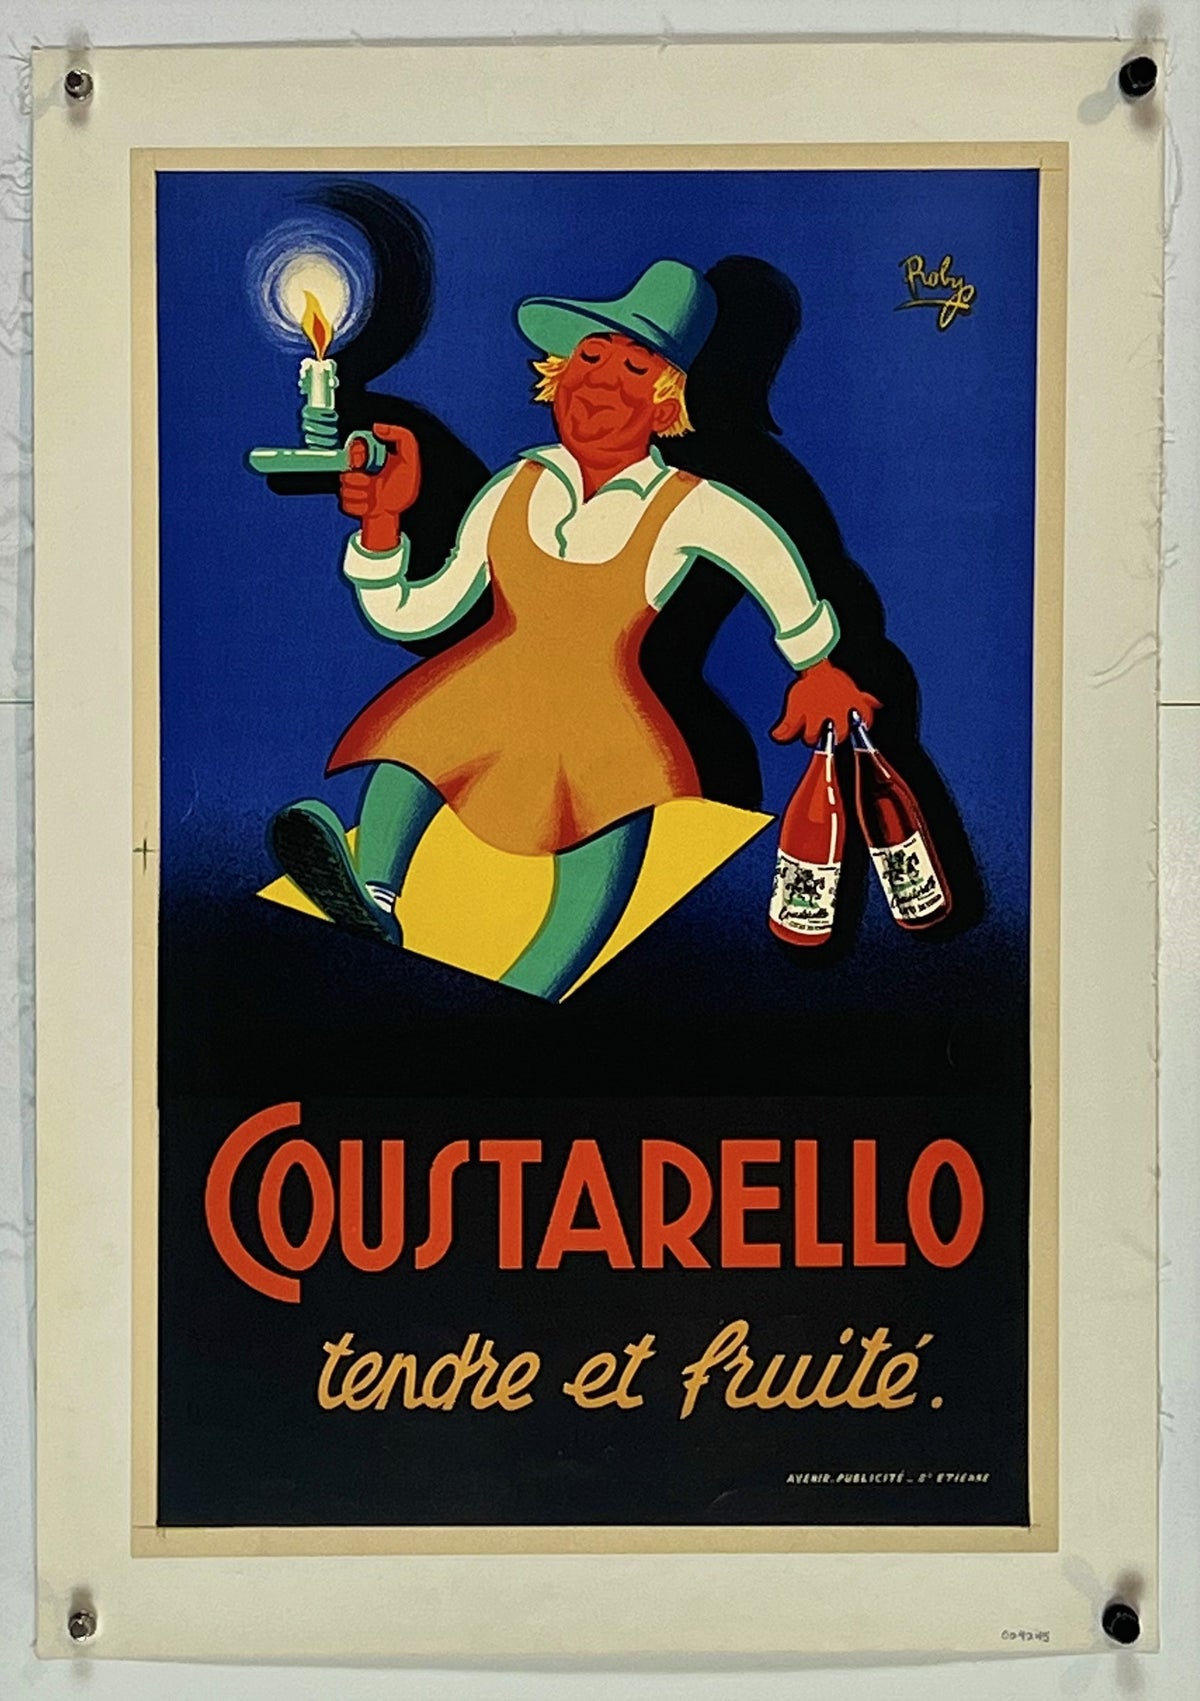 Coustarello - Authentic Vintage Poster